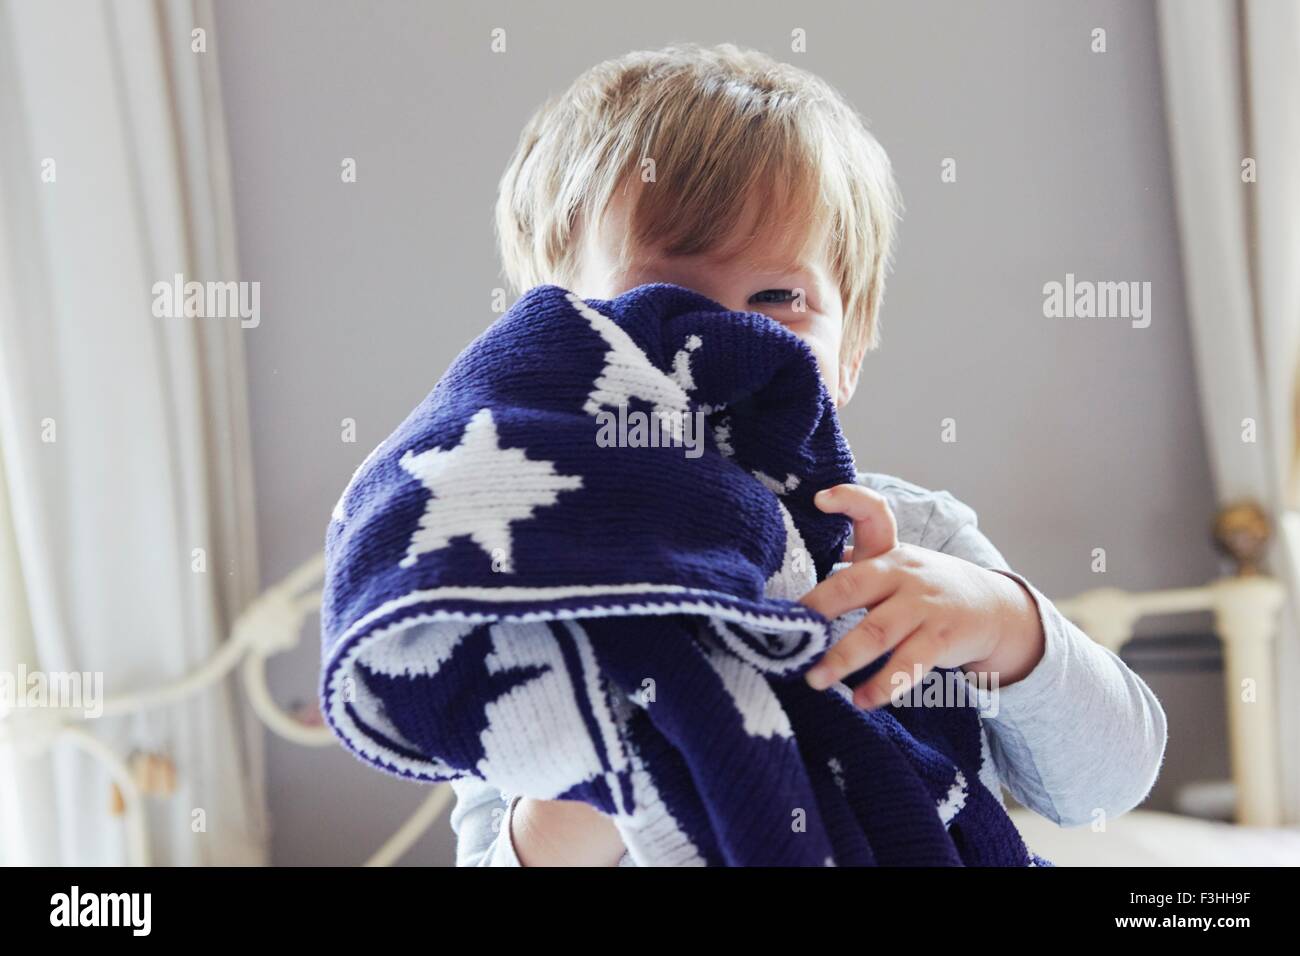 Boy on bed hiding behind navy blue star patterned woollen blanket Stock Photo